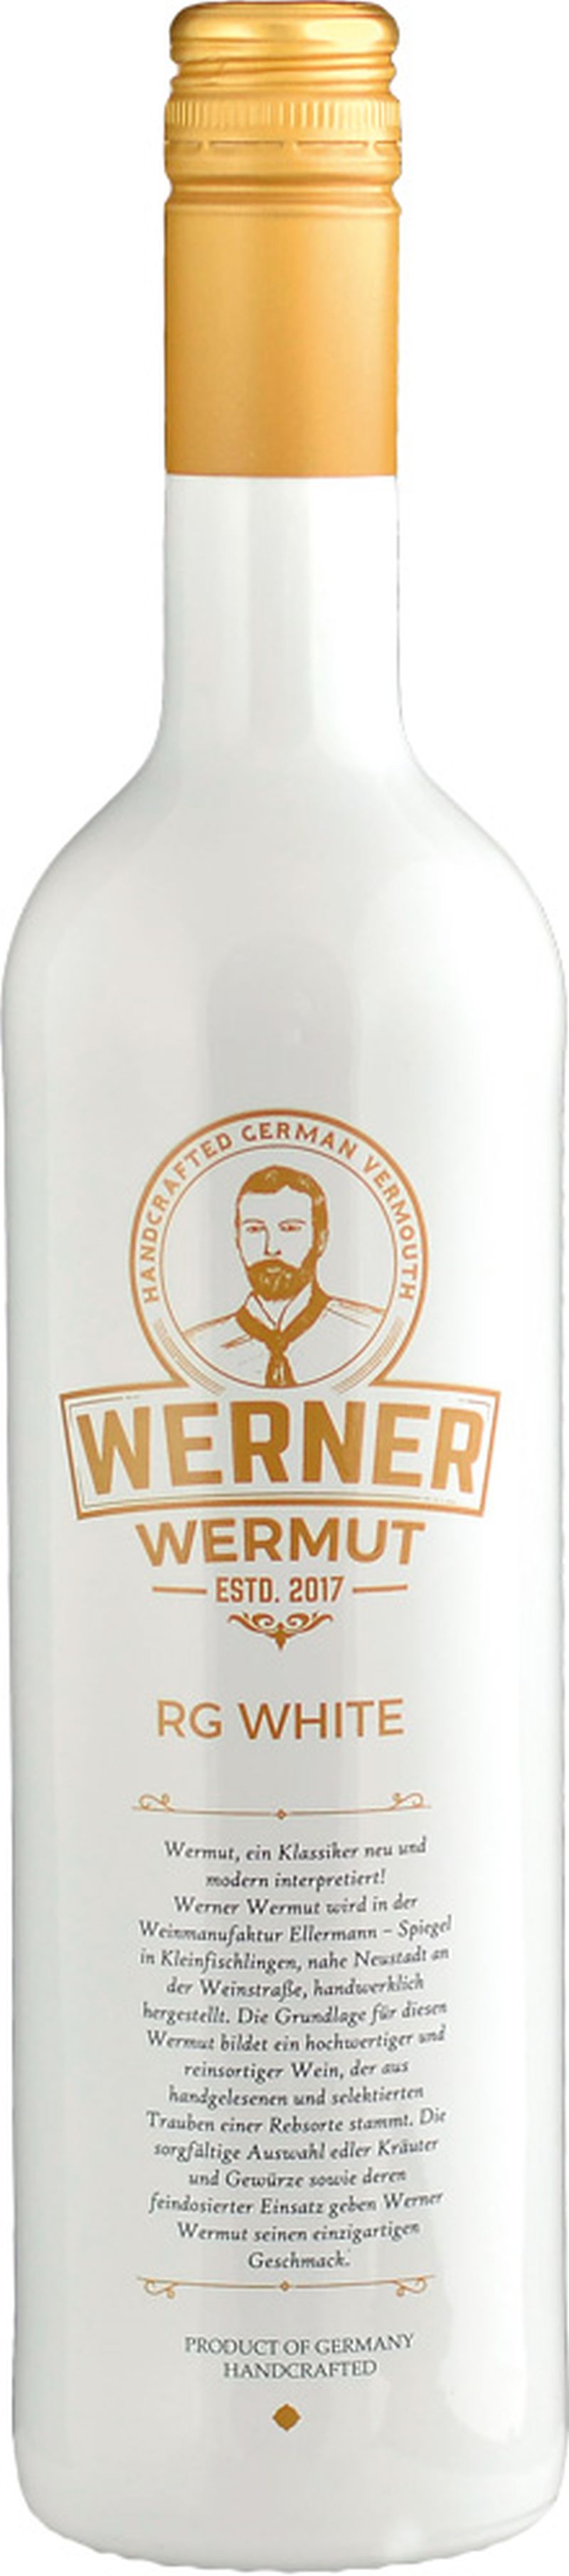 Genuss-Schule Alfter - WERNER WERMUT RG weiss, 750 ml